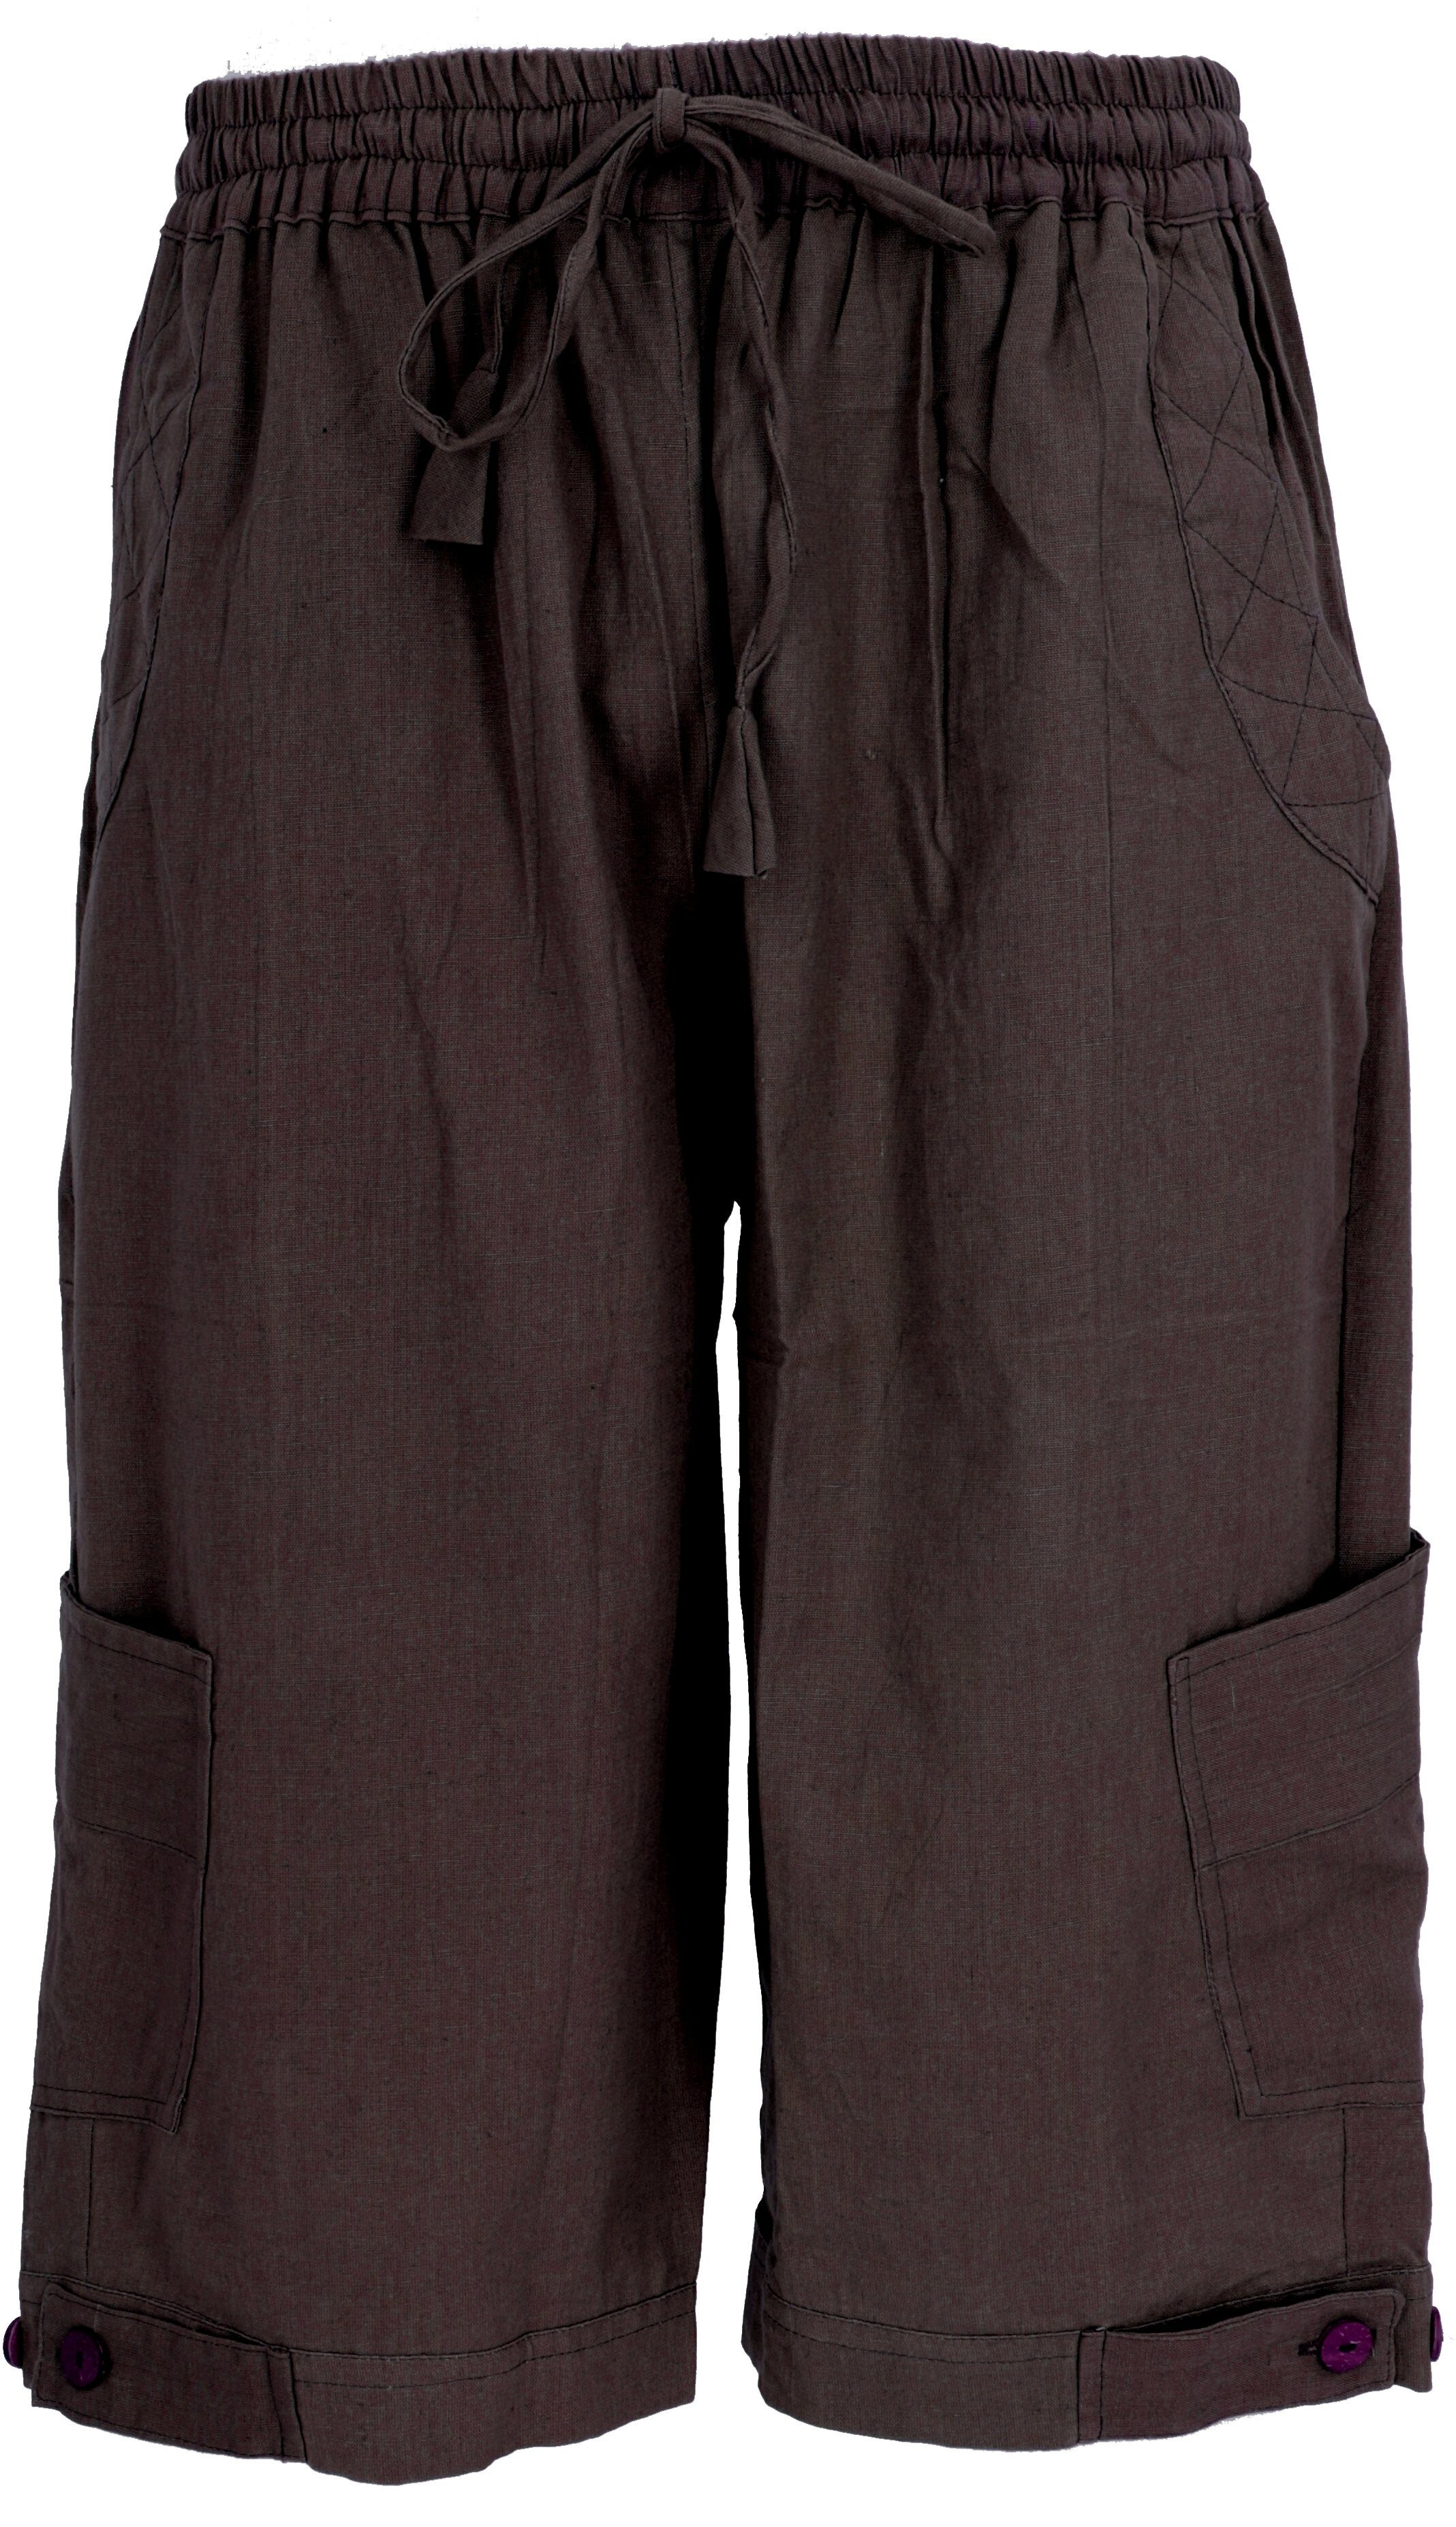 Style, alternative Relaxhose Guru-Shop - Ethno Hose, Goa Bekleidung Yogahose, 3/4 Goa braun Shorts